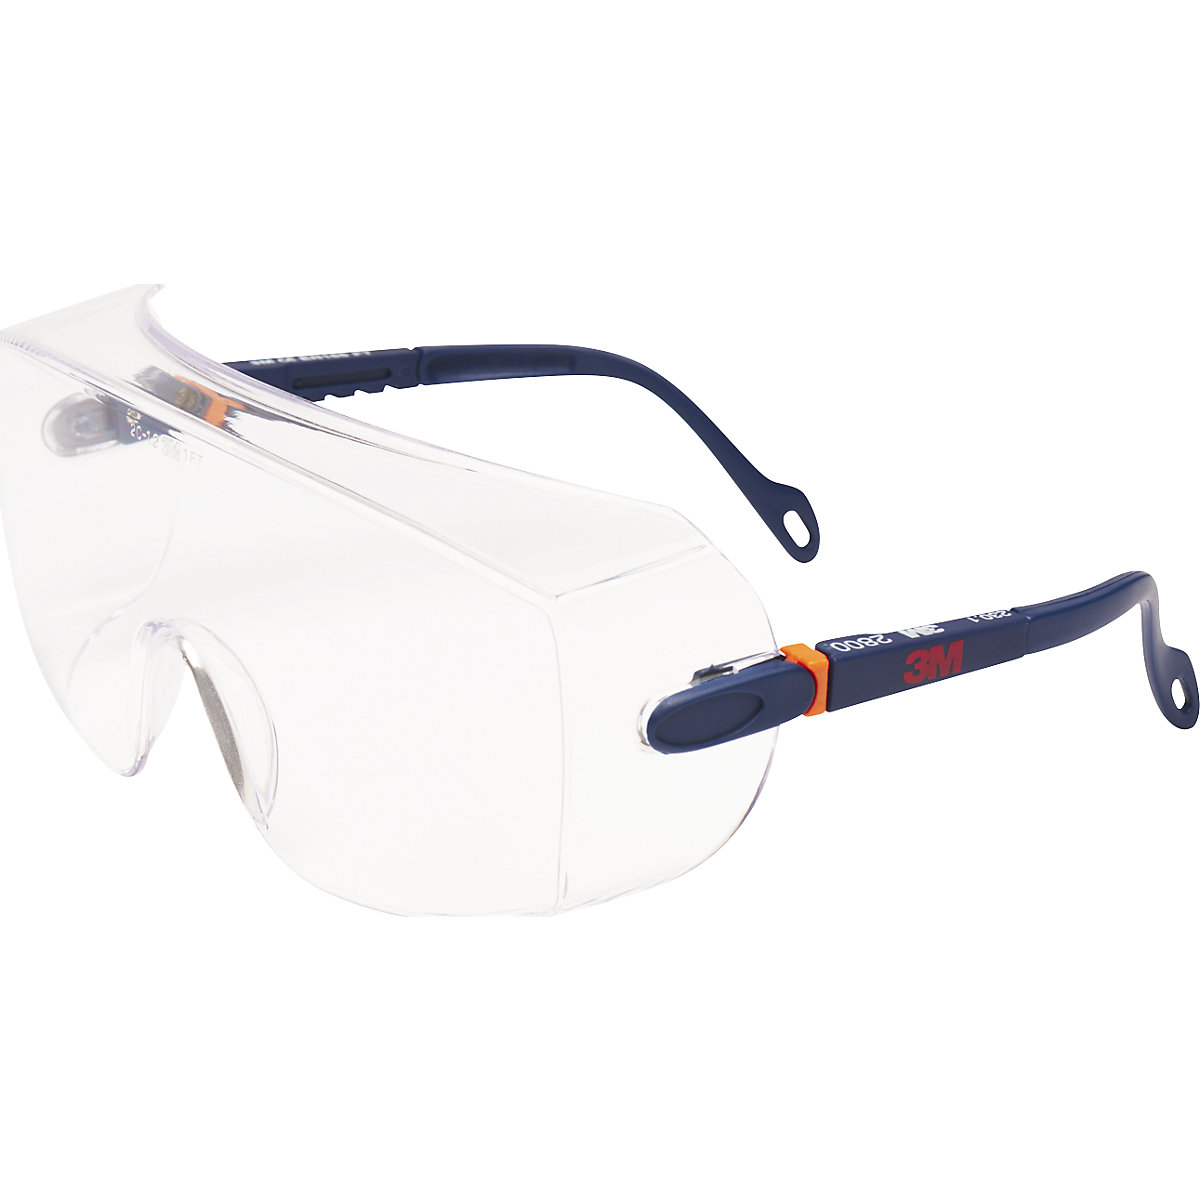 Okulary ochronne nakładane na okulary korekcyjne 2800 - 3M